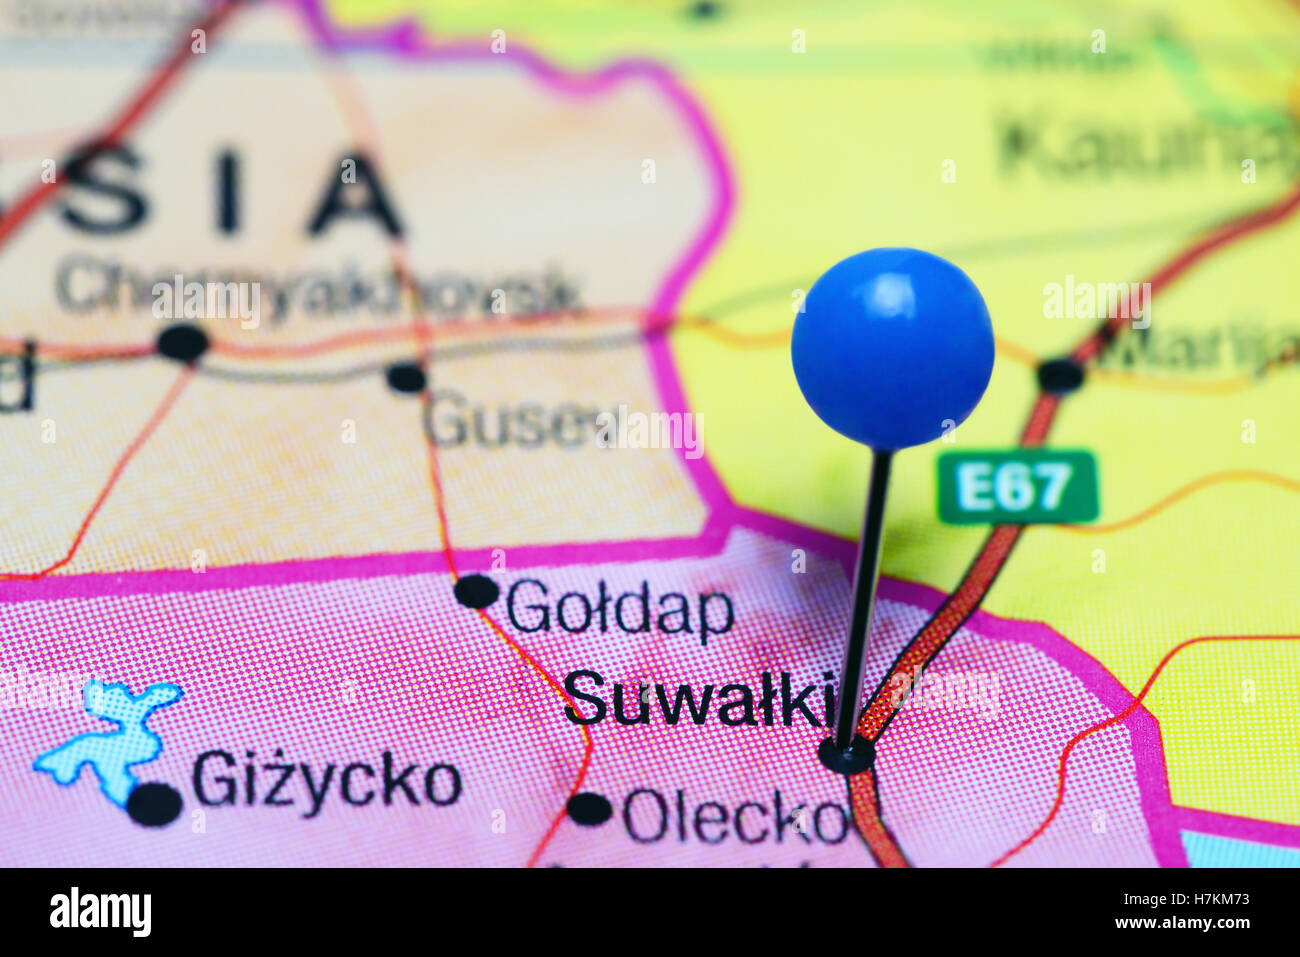 Suwalki pinned on a map of Poland Stock Photo